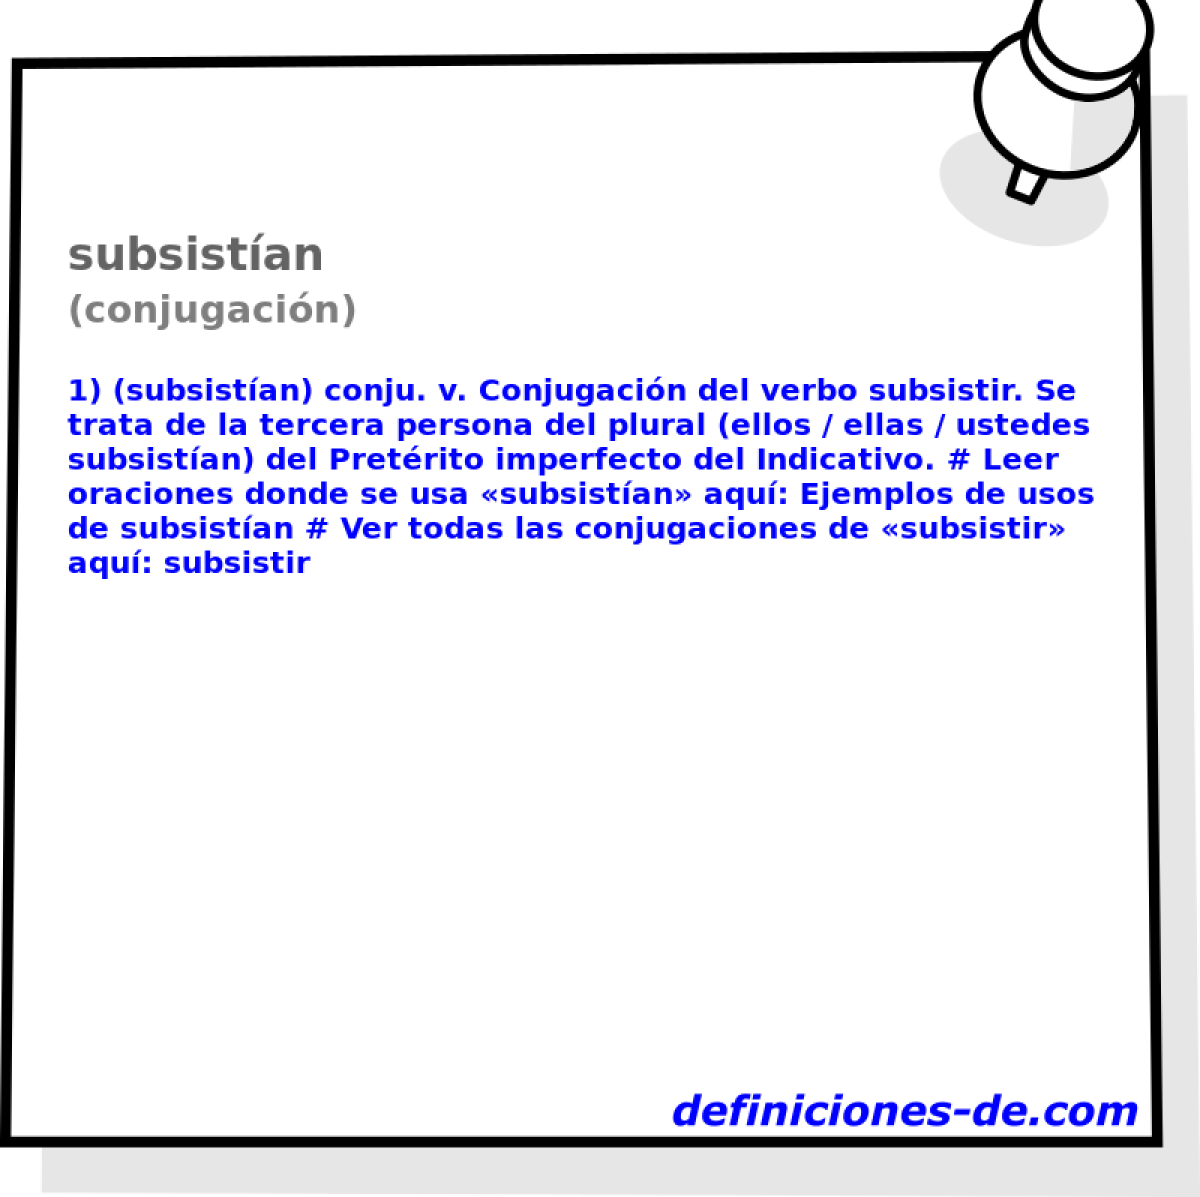 subsistan (conjugacin)